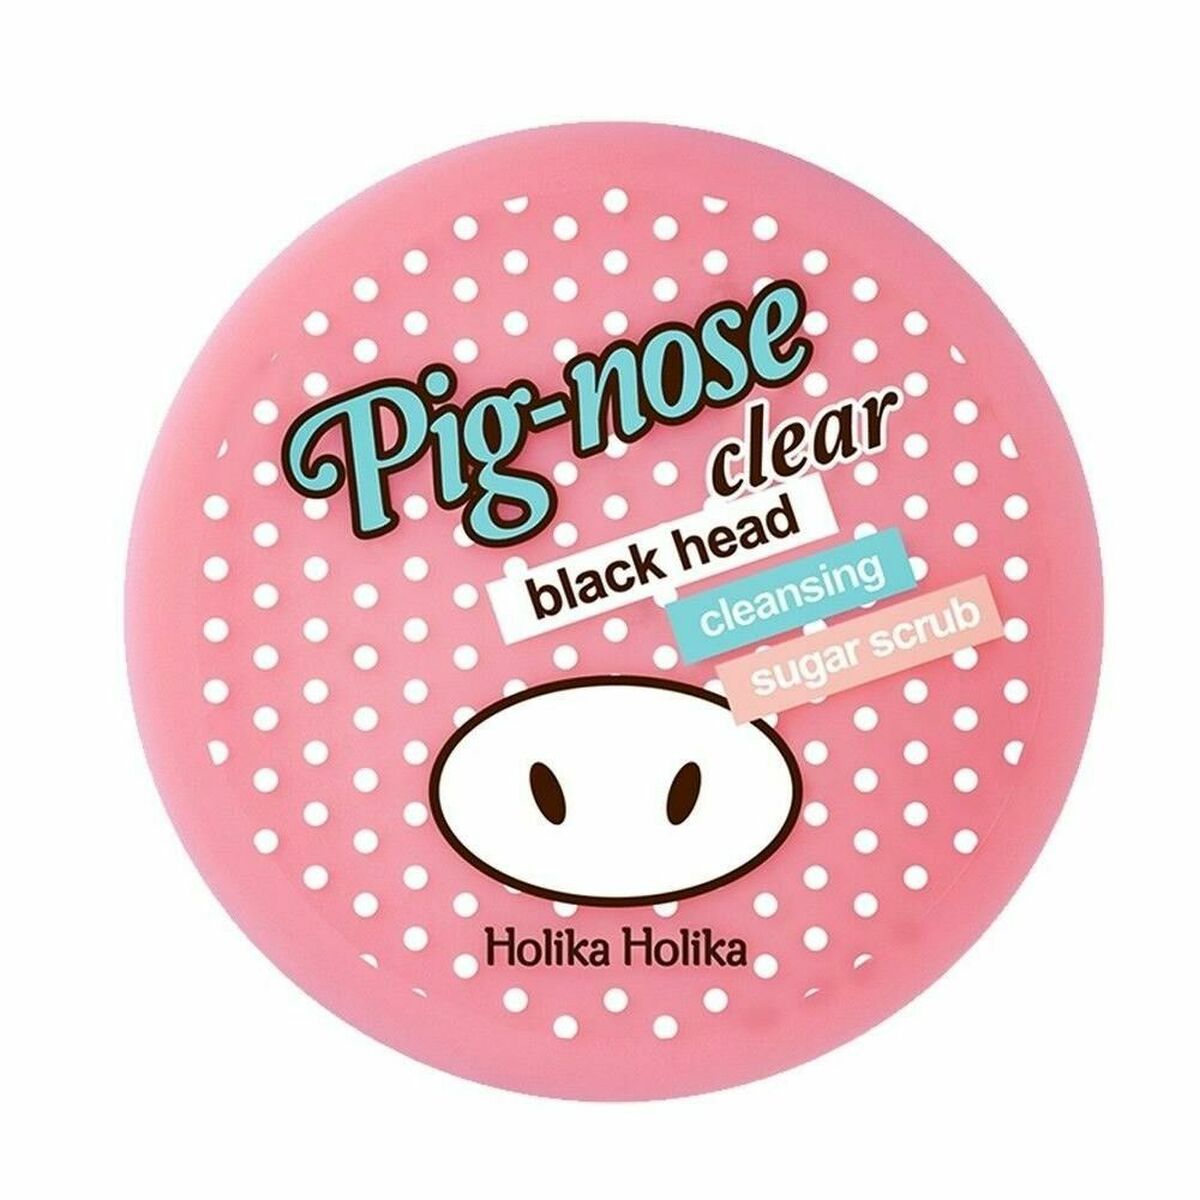 Facial Exfoliator Holika Holika Pig Nose Clear Blackhead (25 g)-0